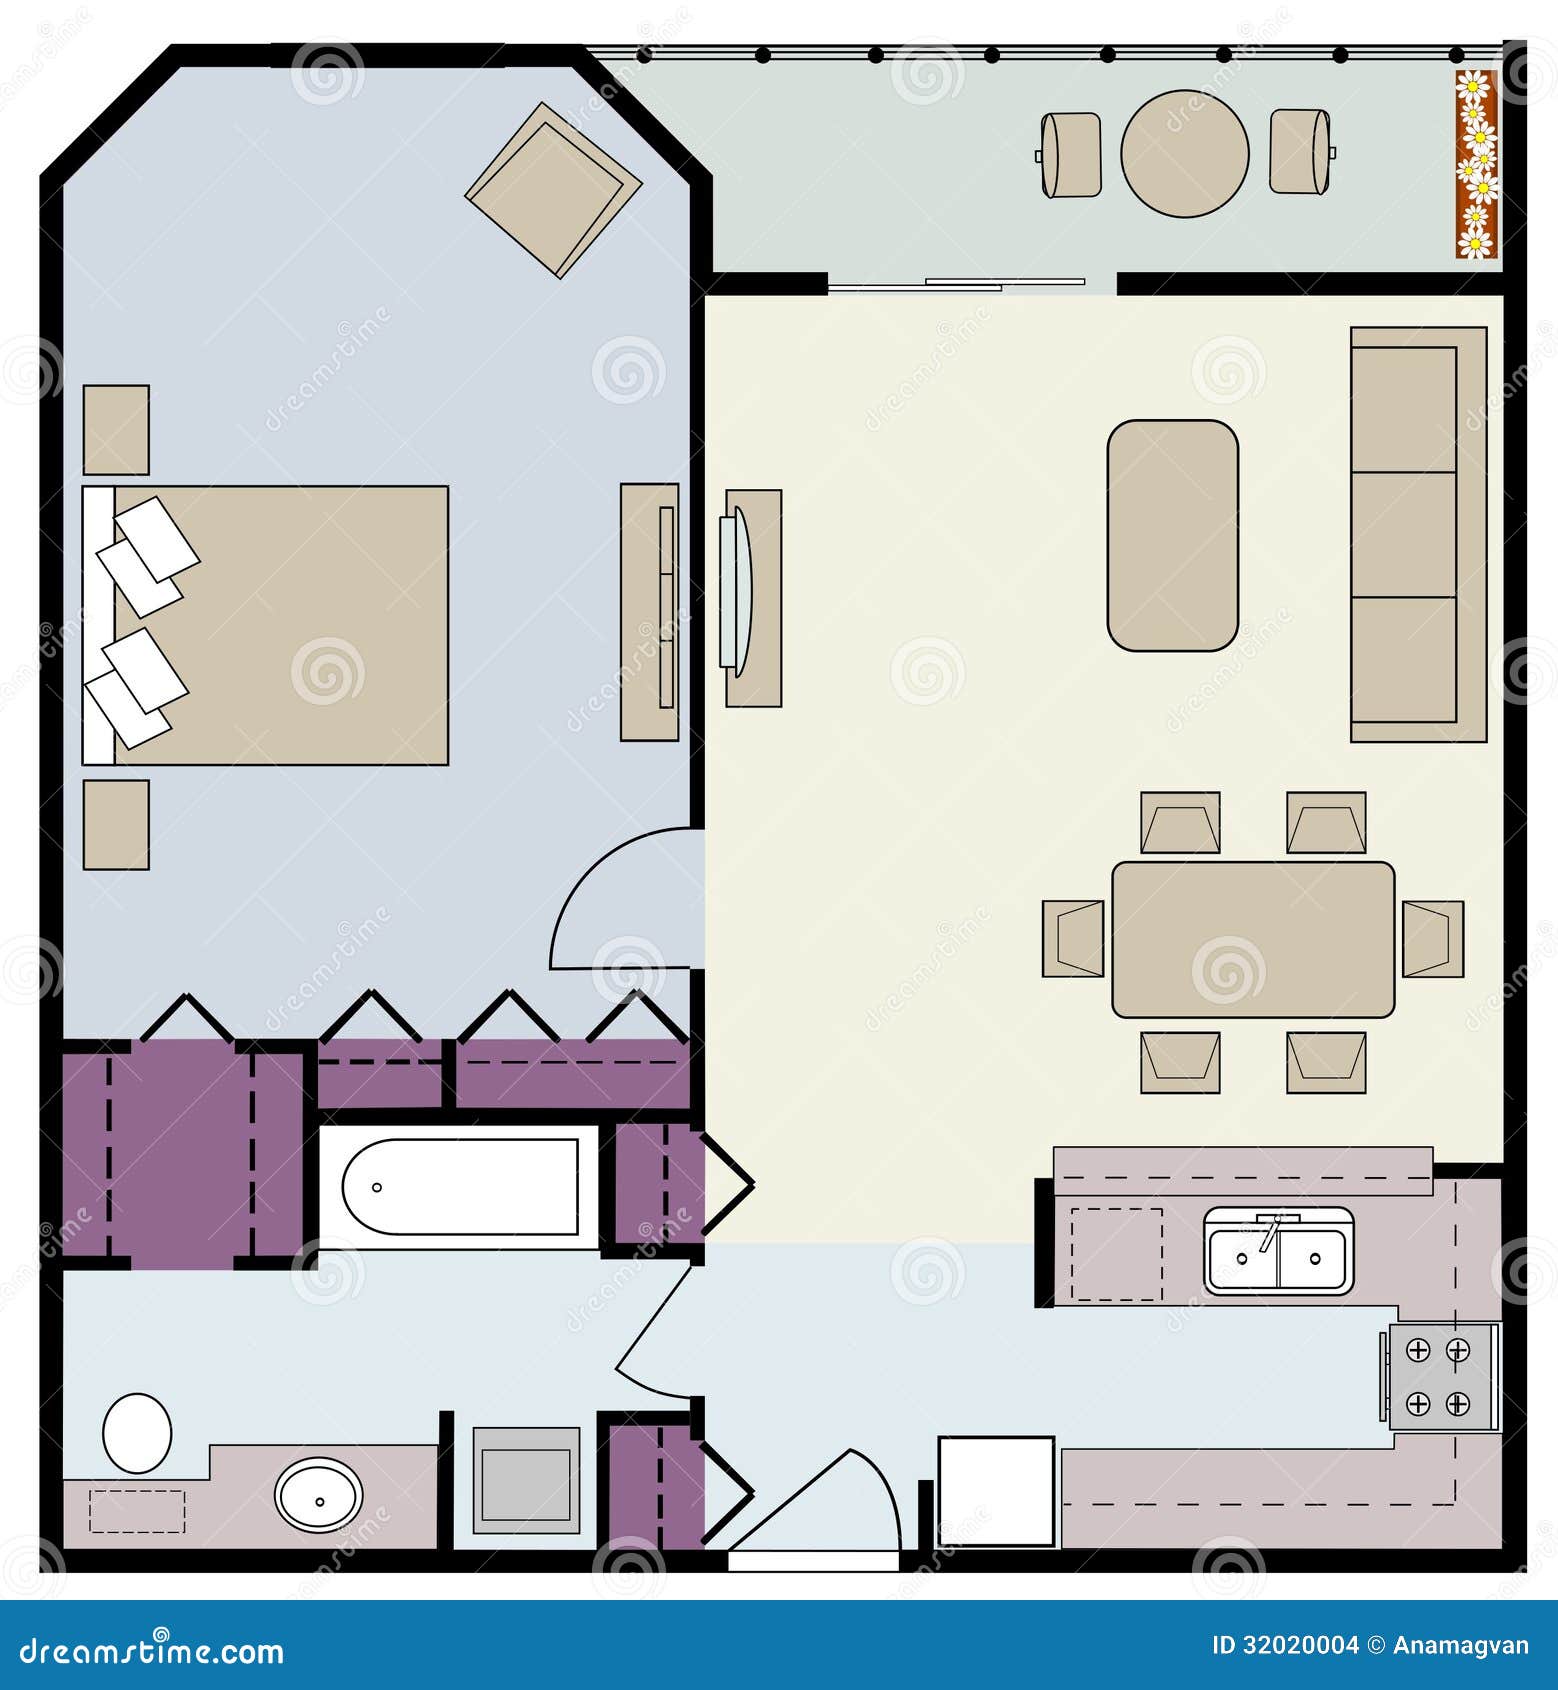 One-Bedroom Condo Floor Plan